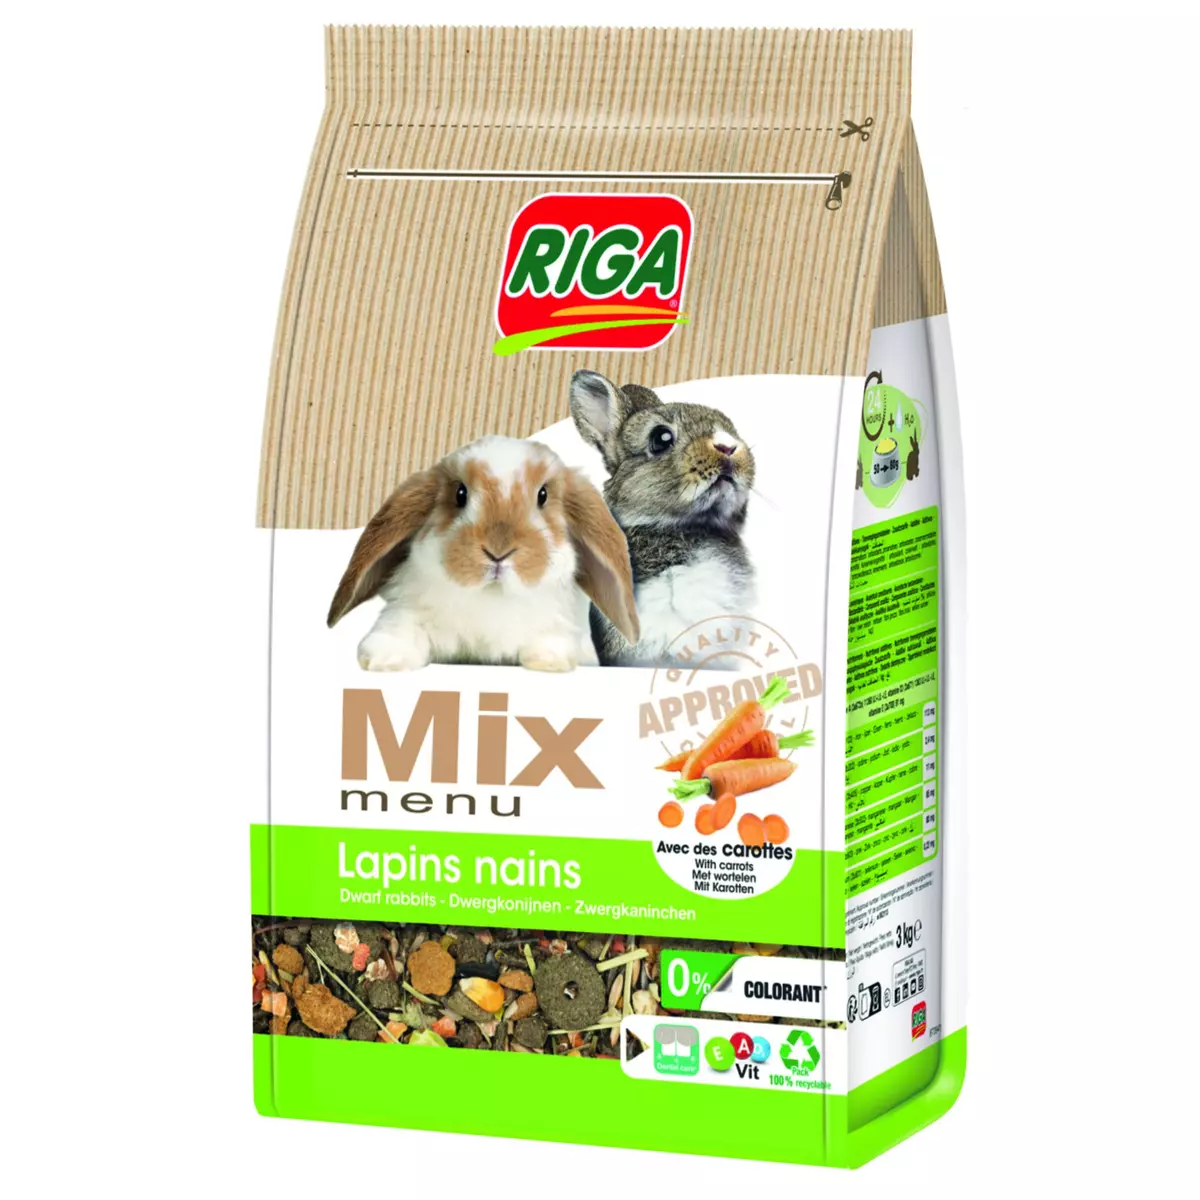 RIGA Mix menu avec des carottes pour lapins nains 3kg